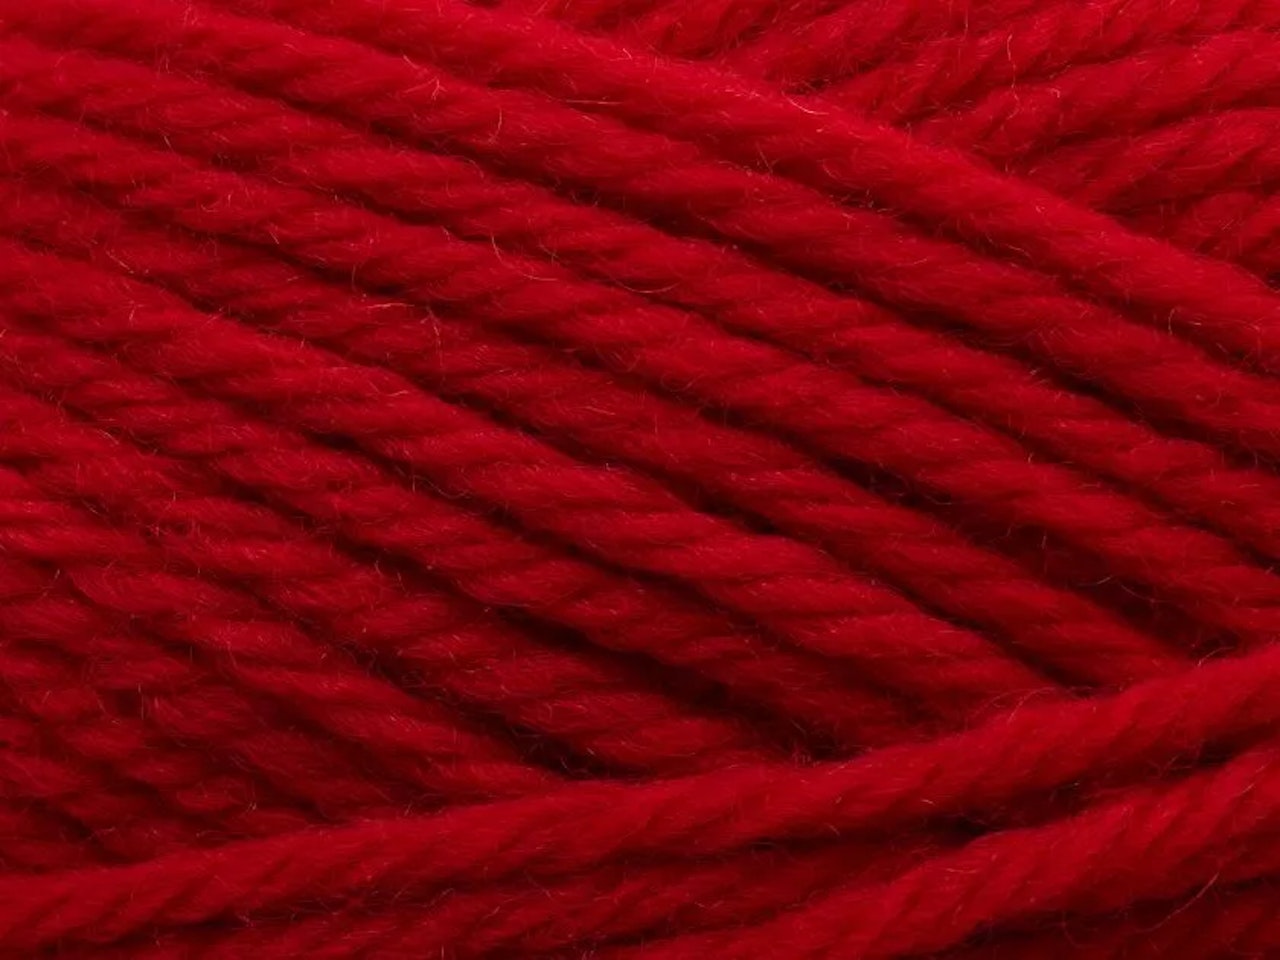 Peruvian highland wool-Chinese red 318